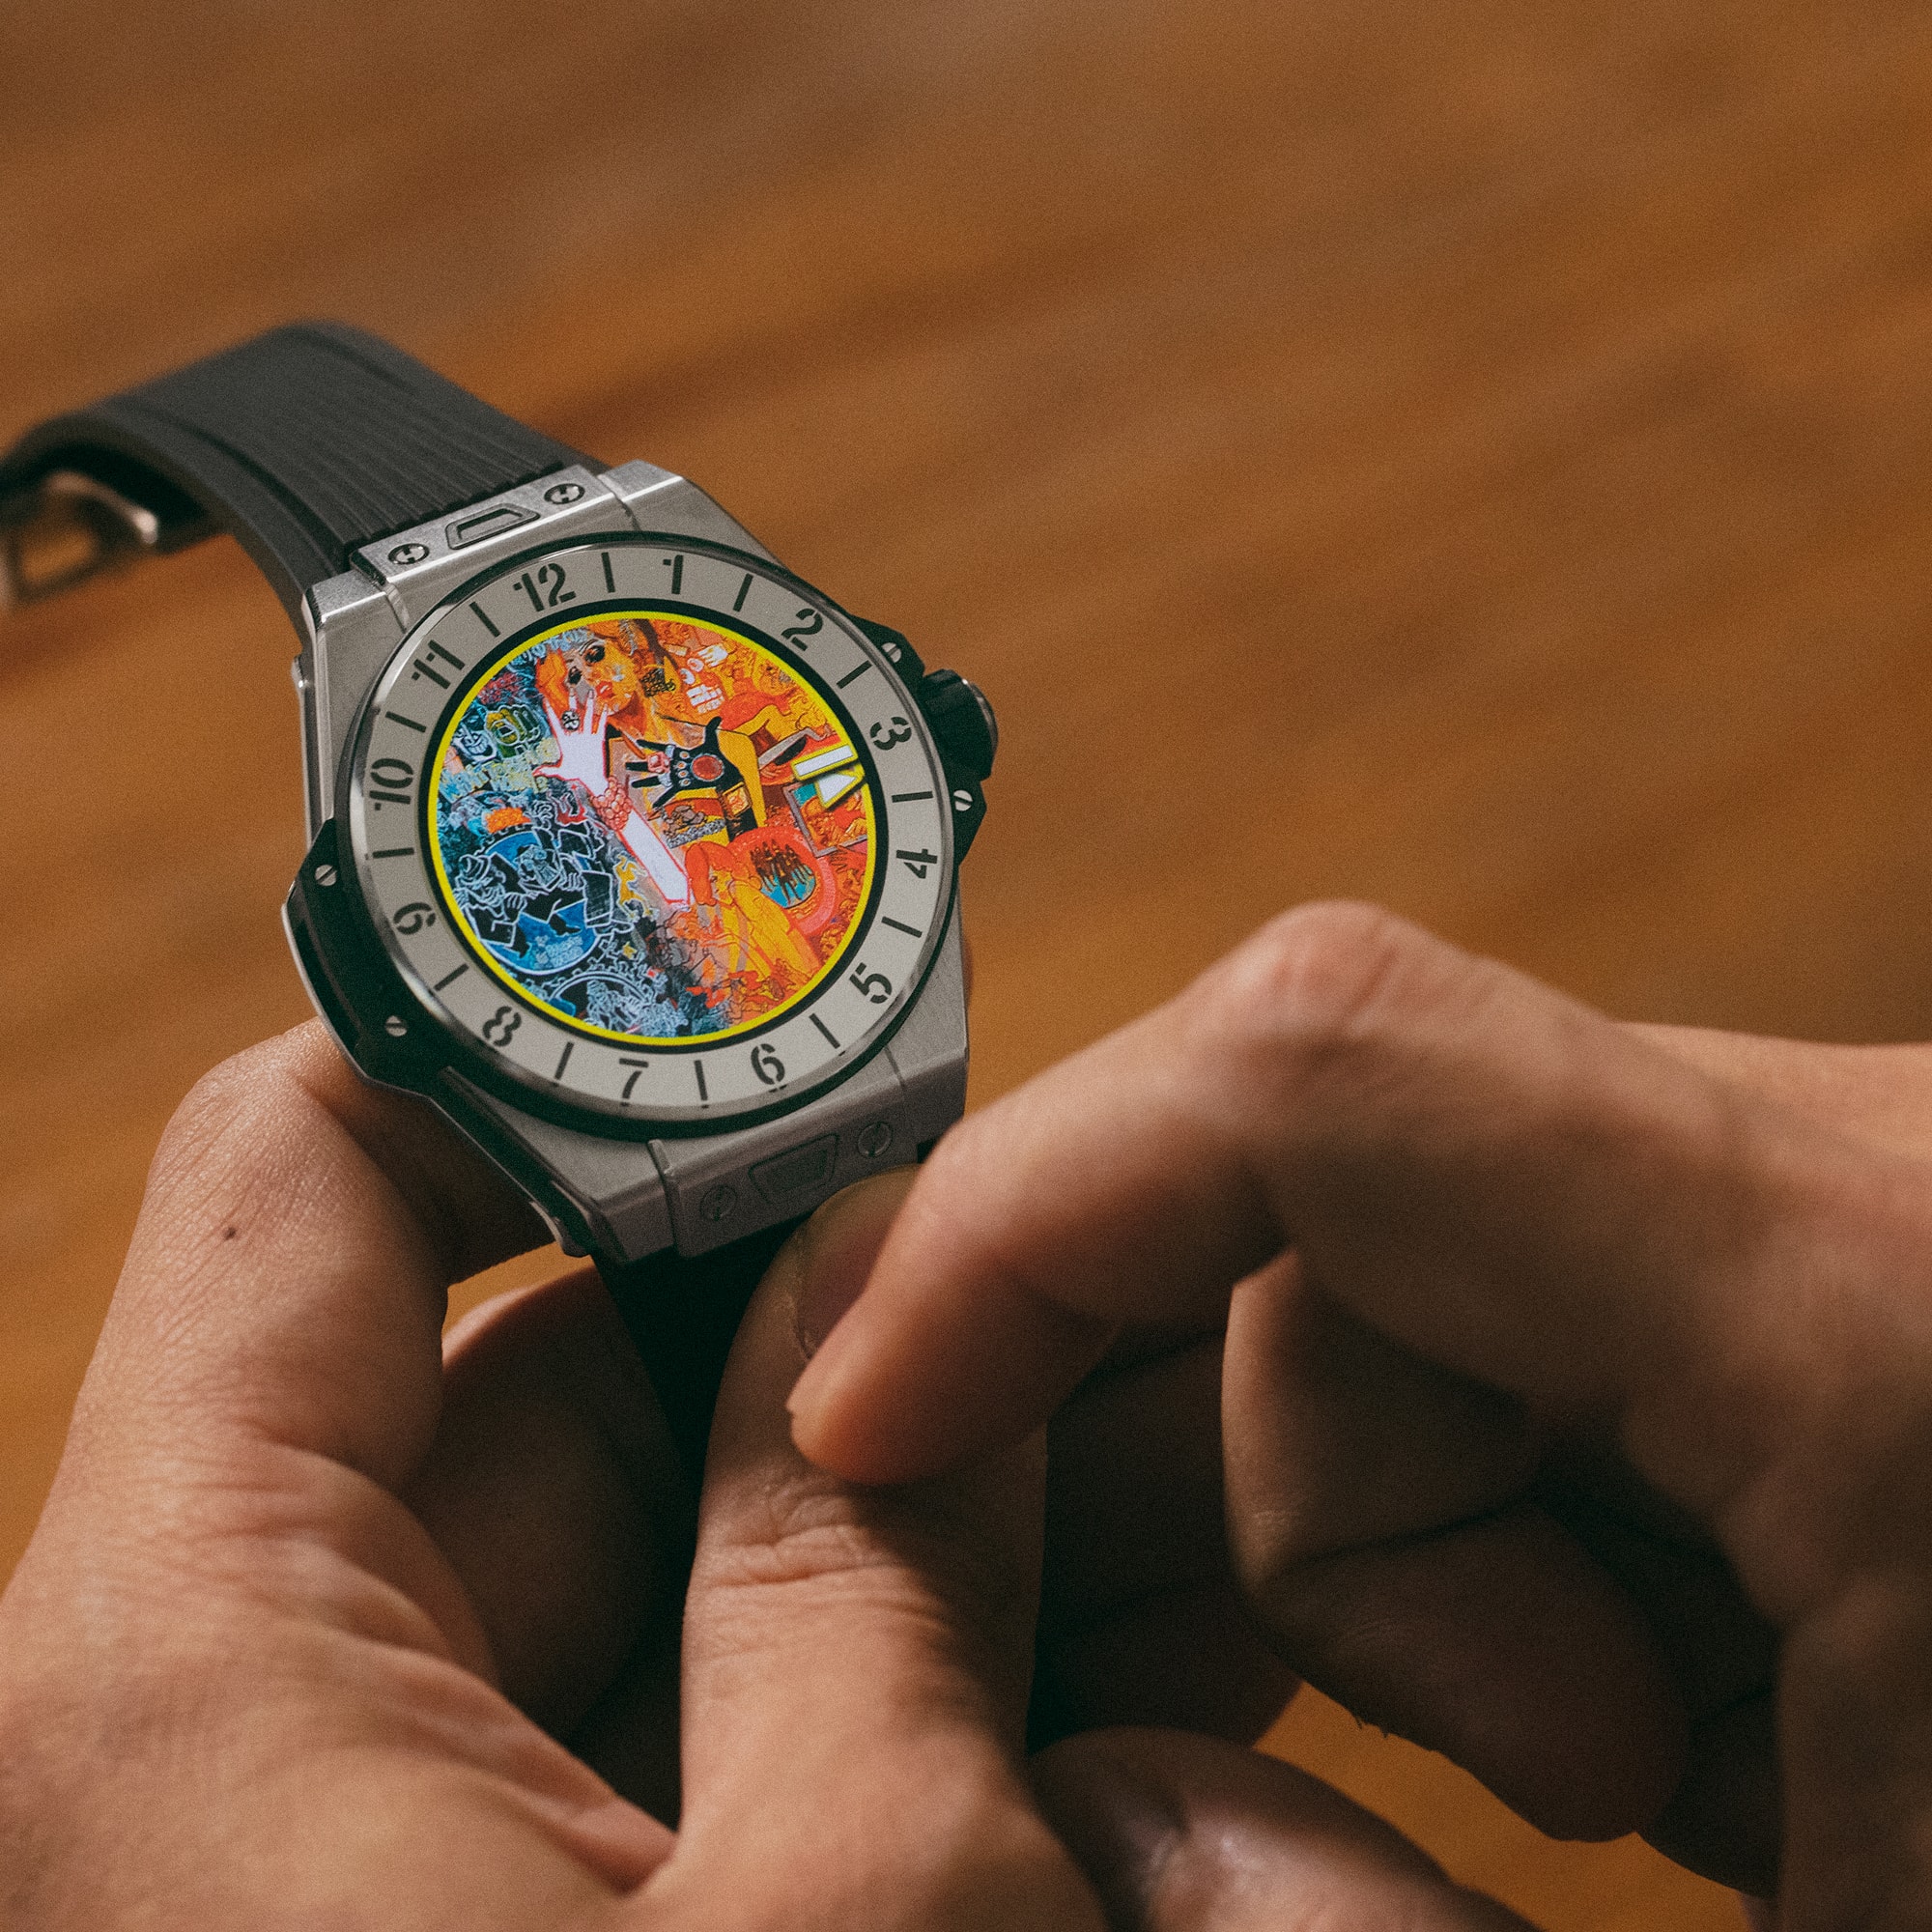 從 Hublot 智能腕錶 Big Bang e 看腕錶設計的更多可能性 | BUYER'S GUIDE